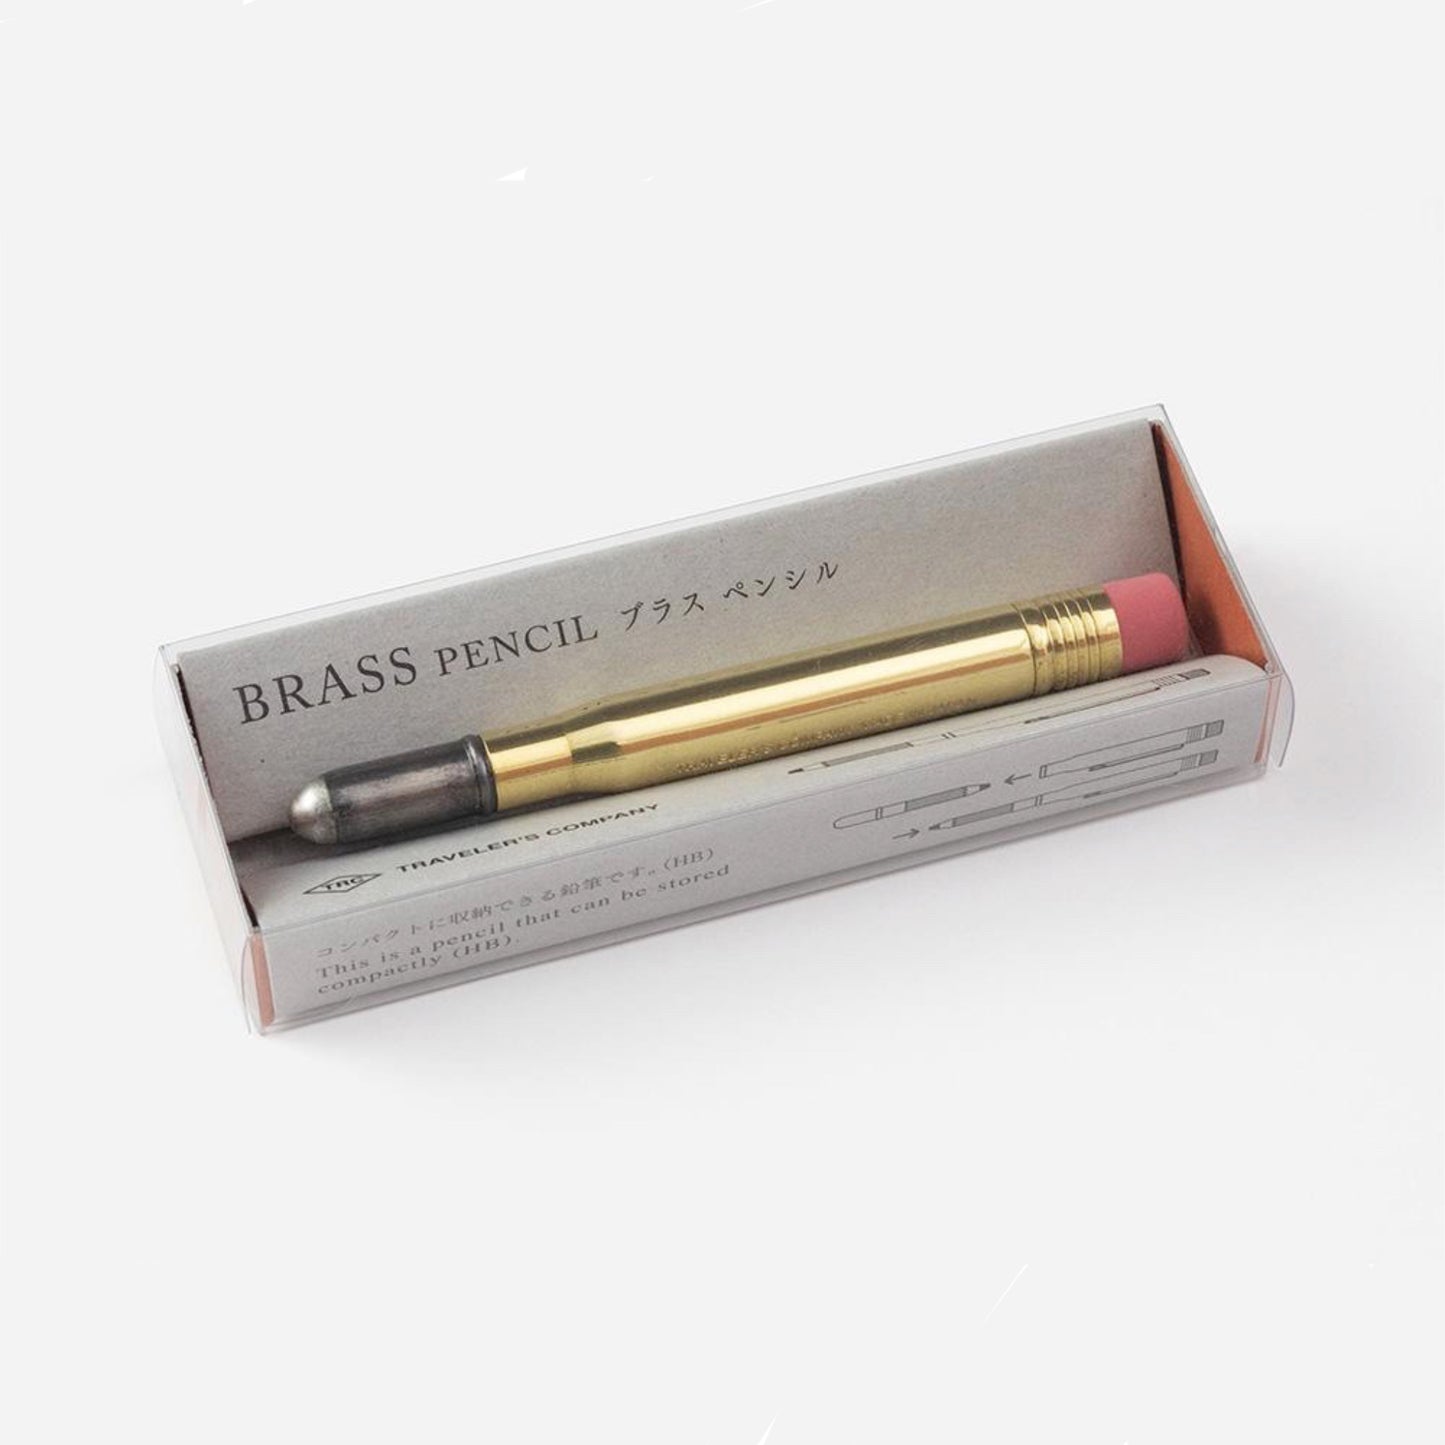 brass pencil in packaging 